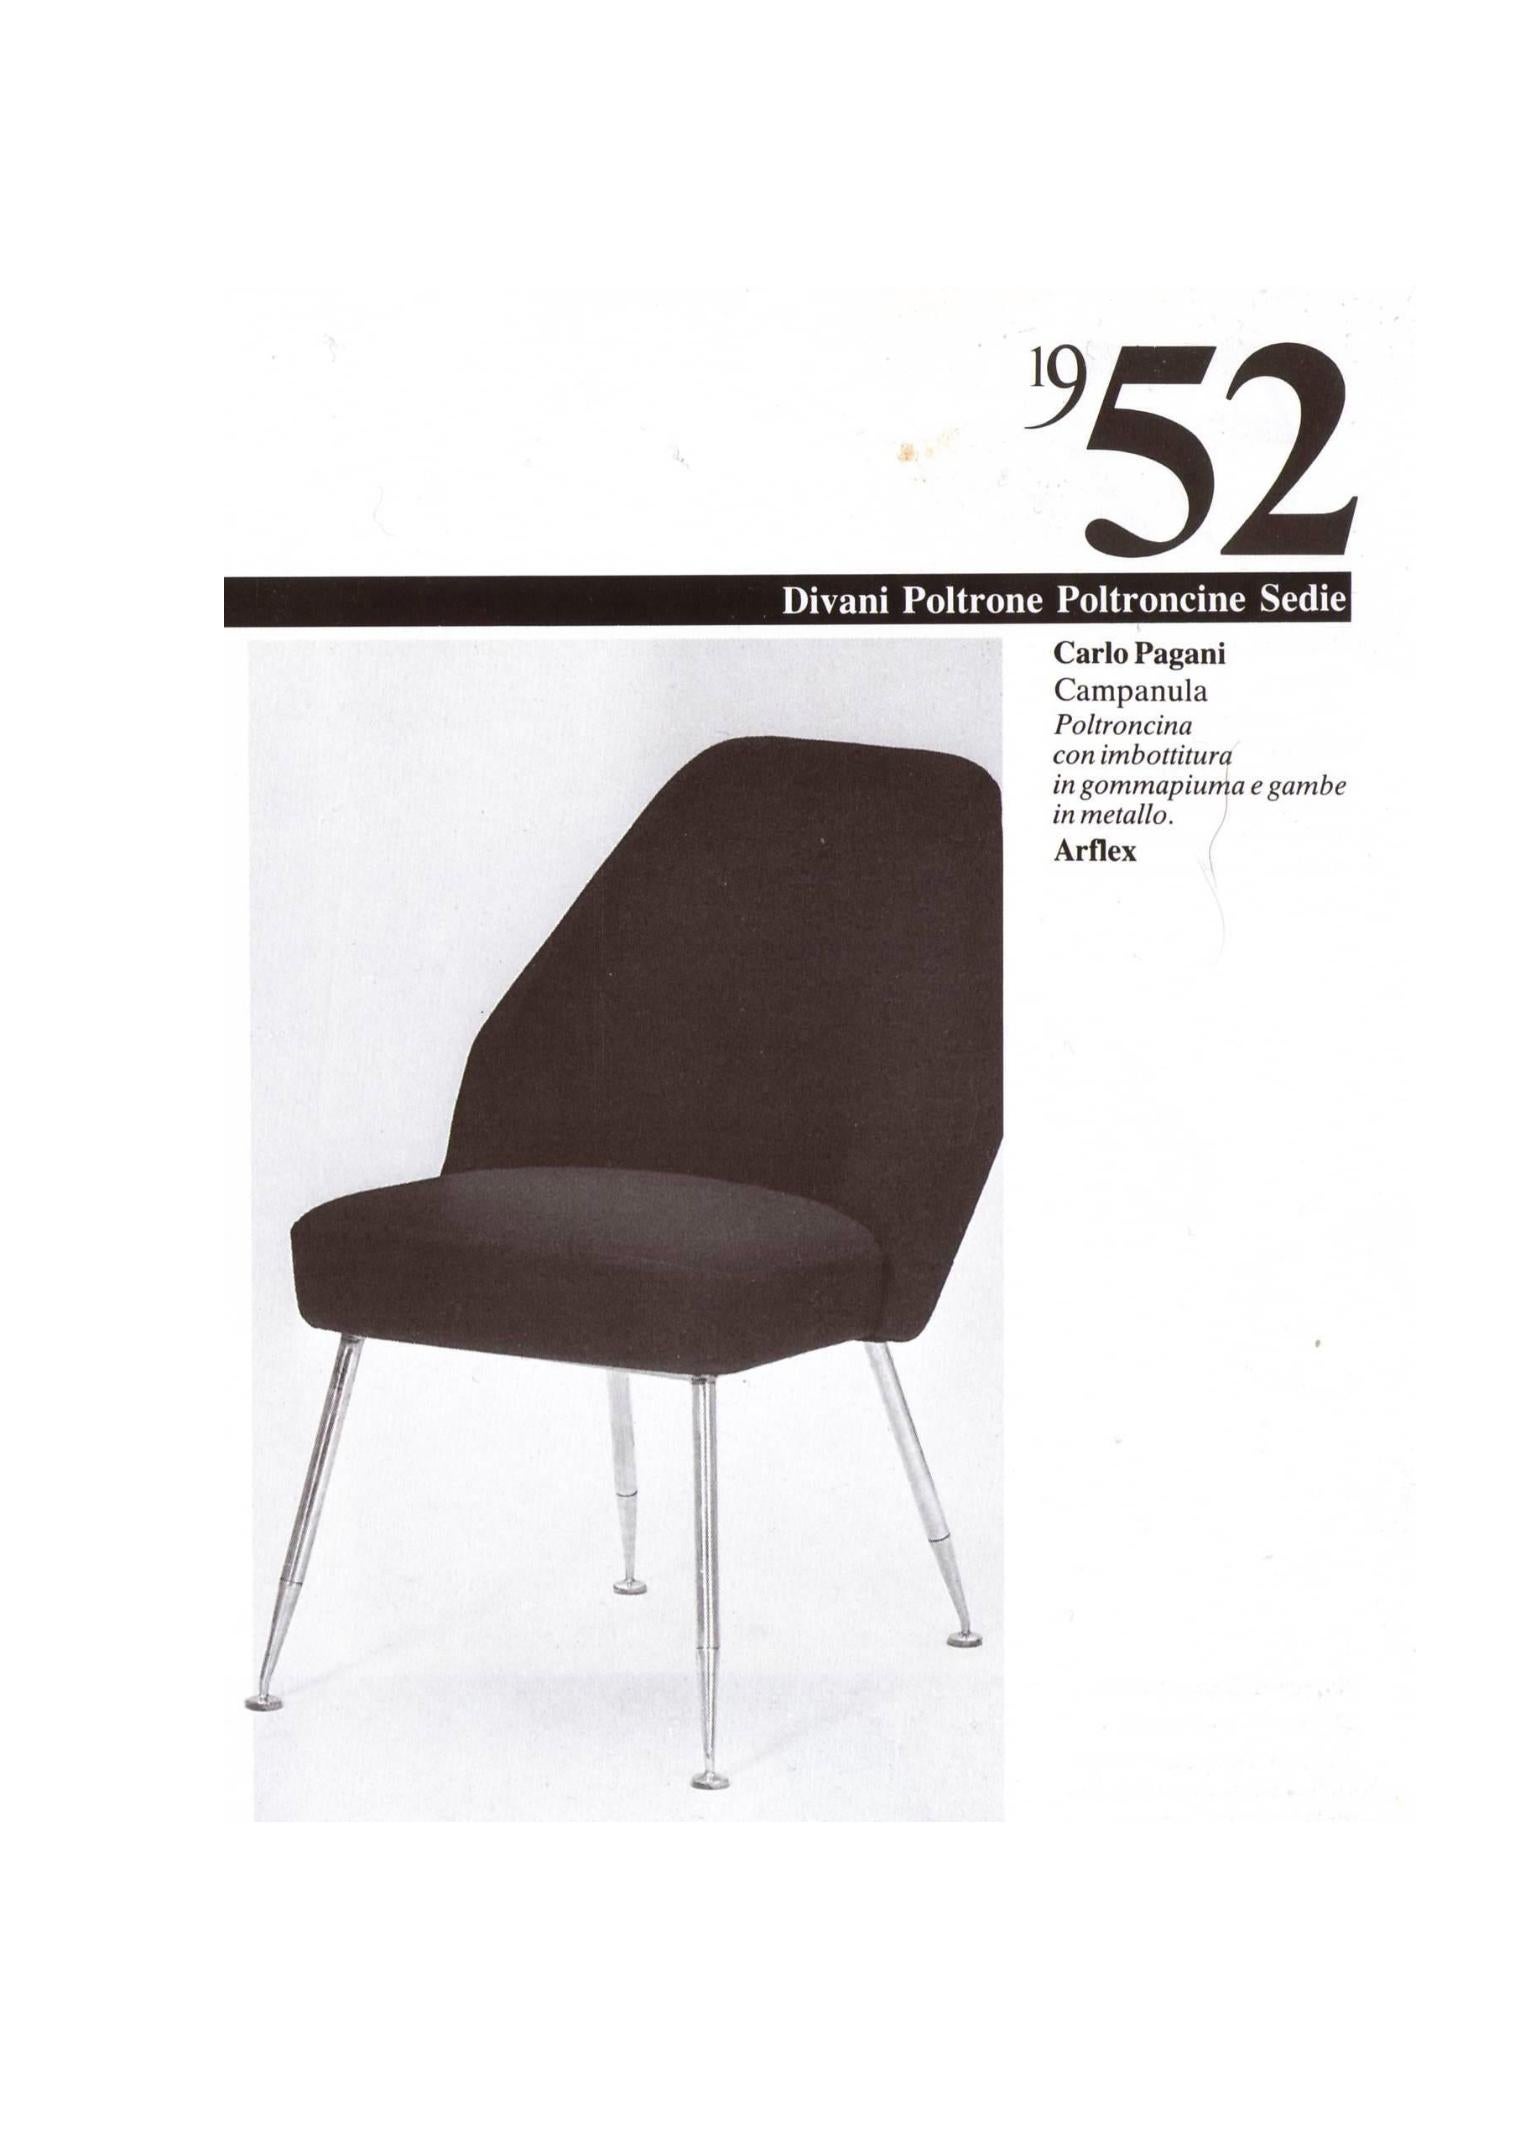 Enameled Campanula Arm Chair by Pagani Partner of Gio Ponti & Lina Bo Bardi, 1952, Arflex For Sale